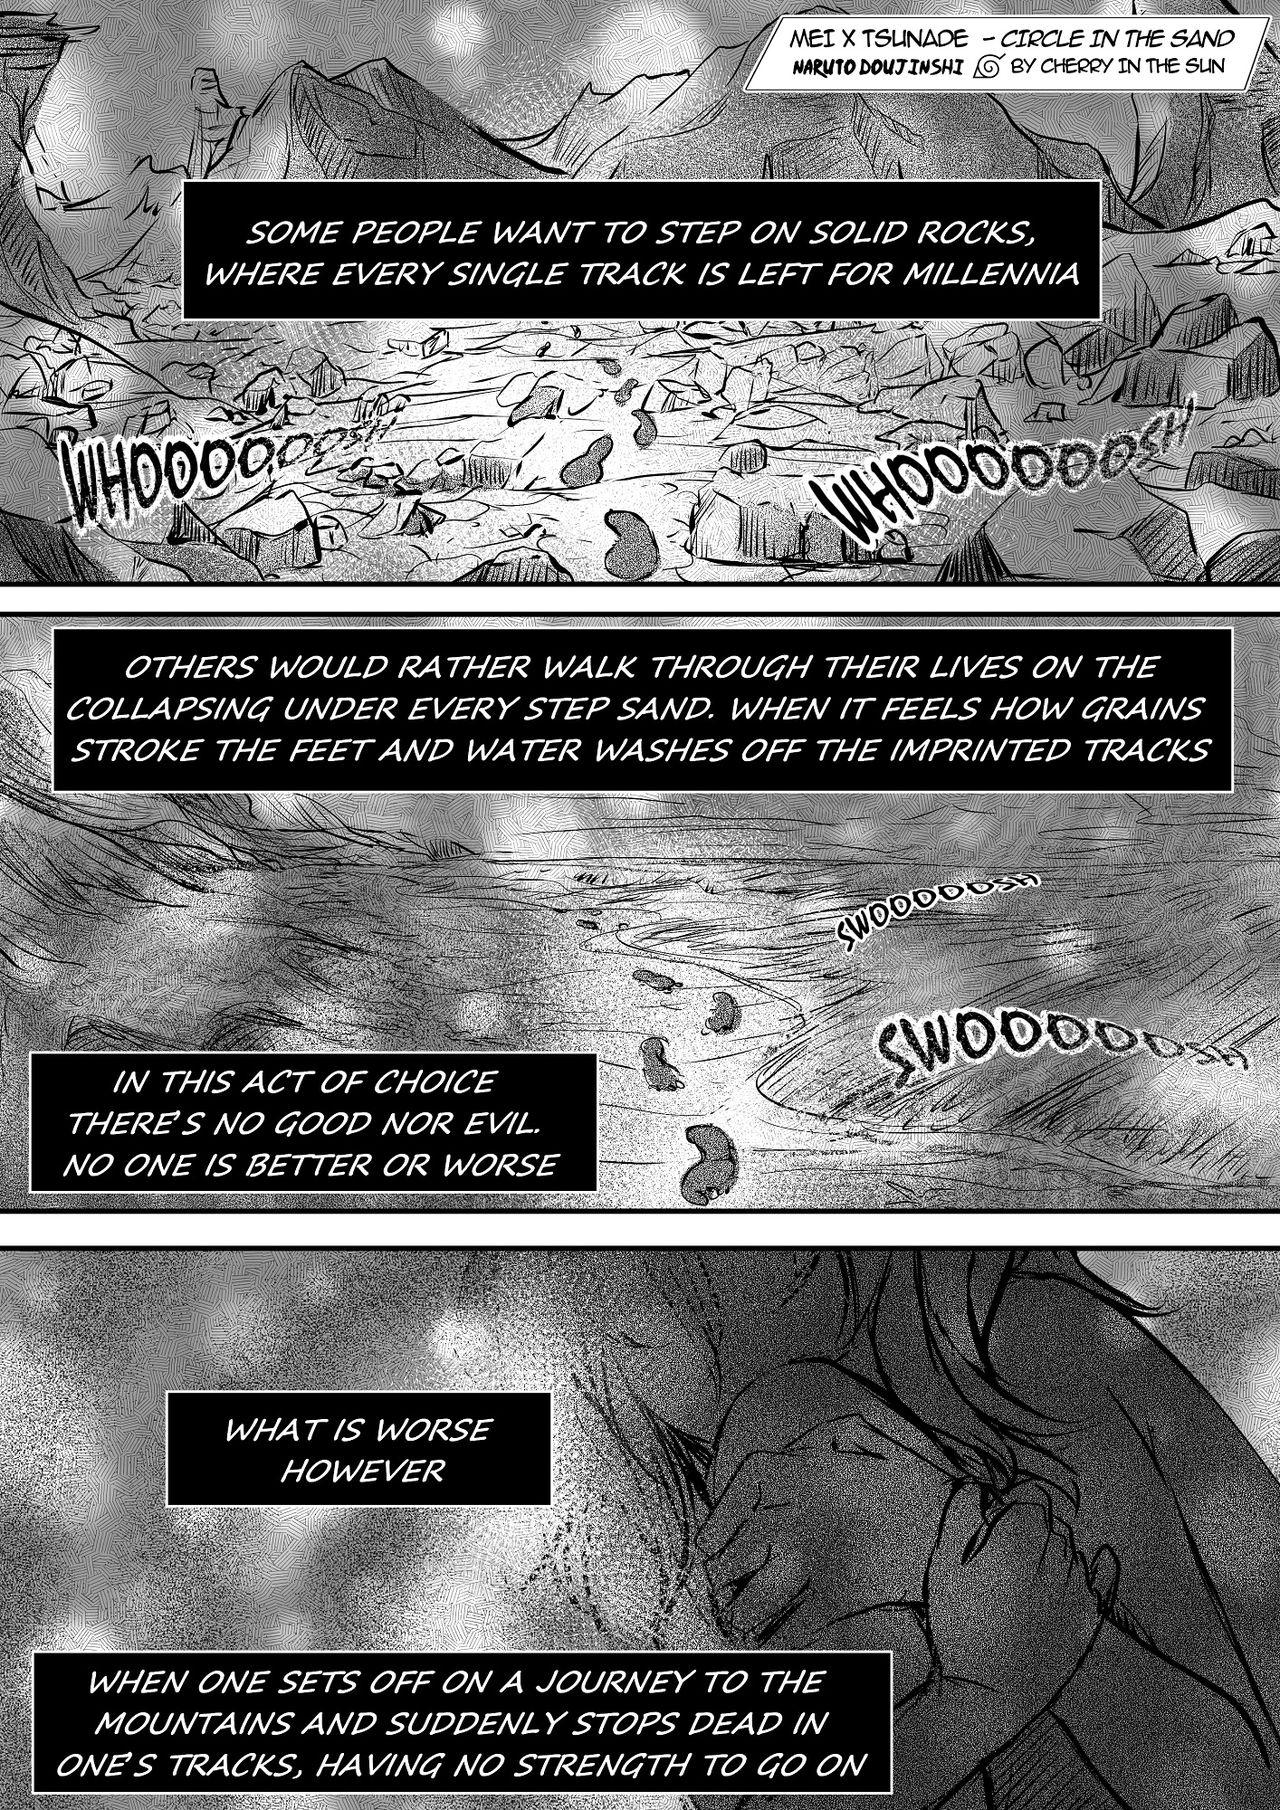 Banho Circle in the Sand - Naruto Gordinha - Page 2